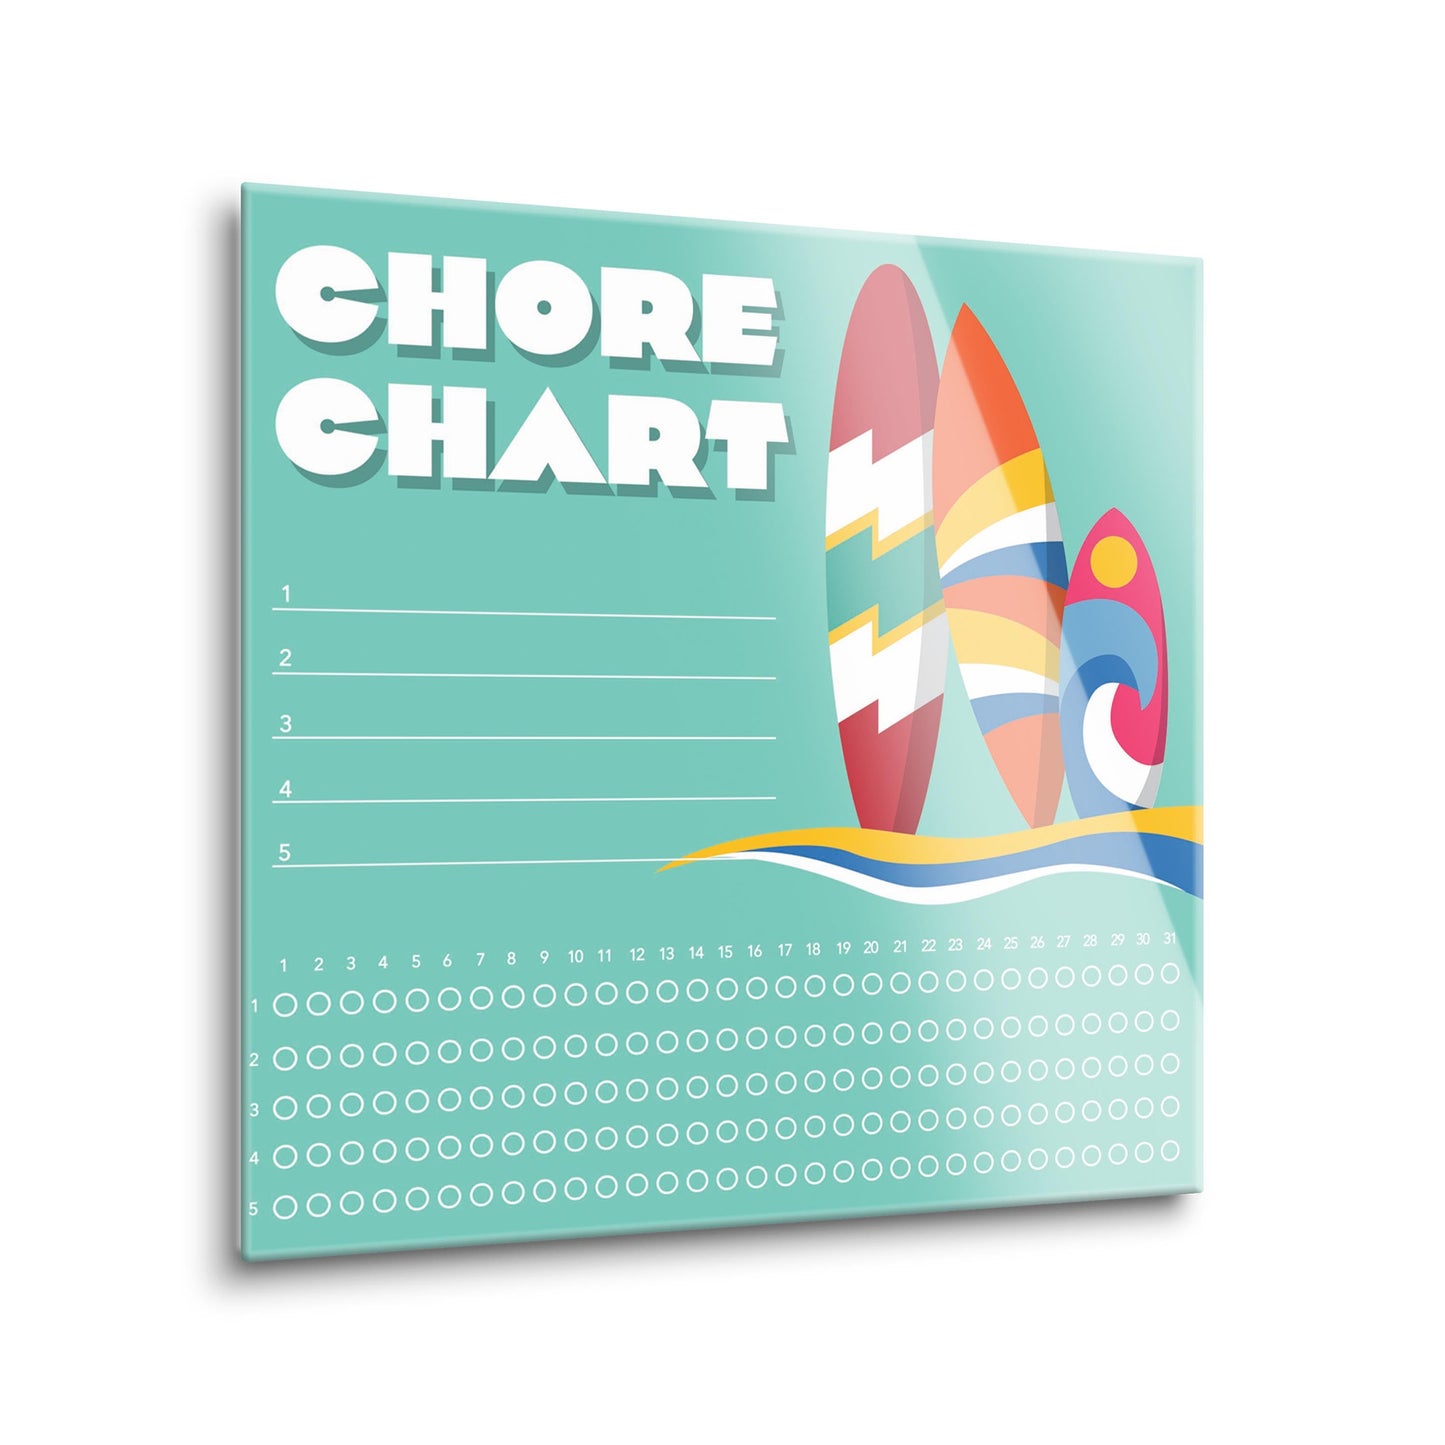 Children's Chore Chart Surf Boards | 8x8